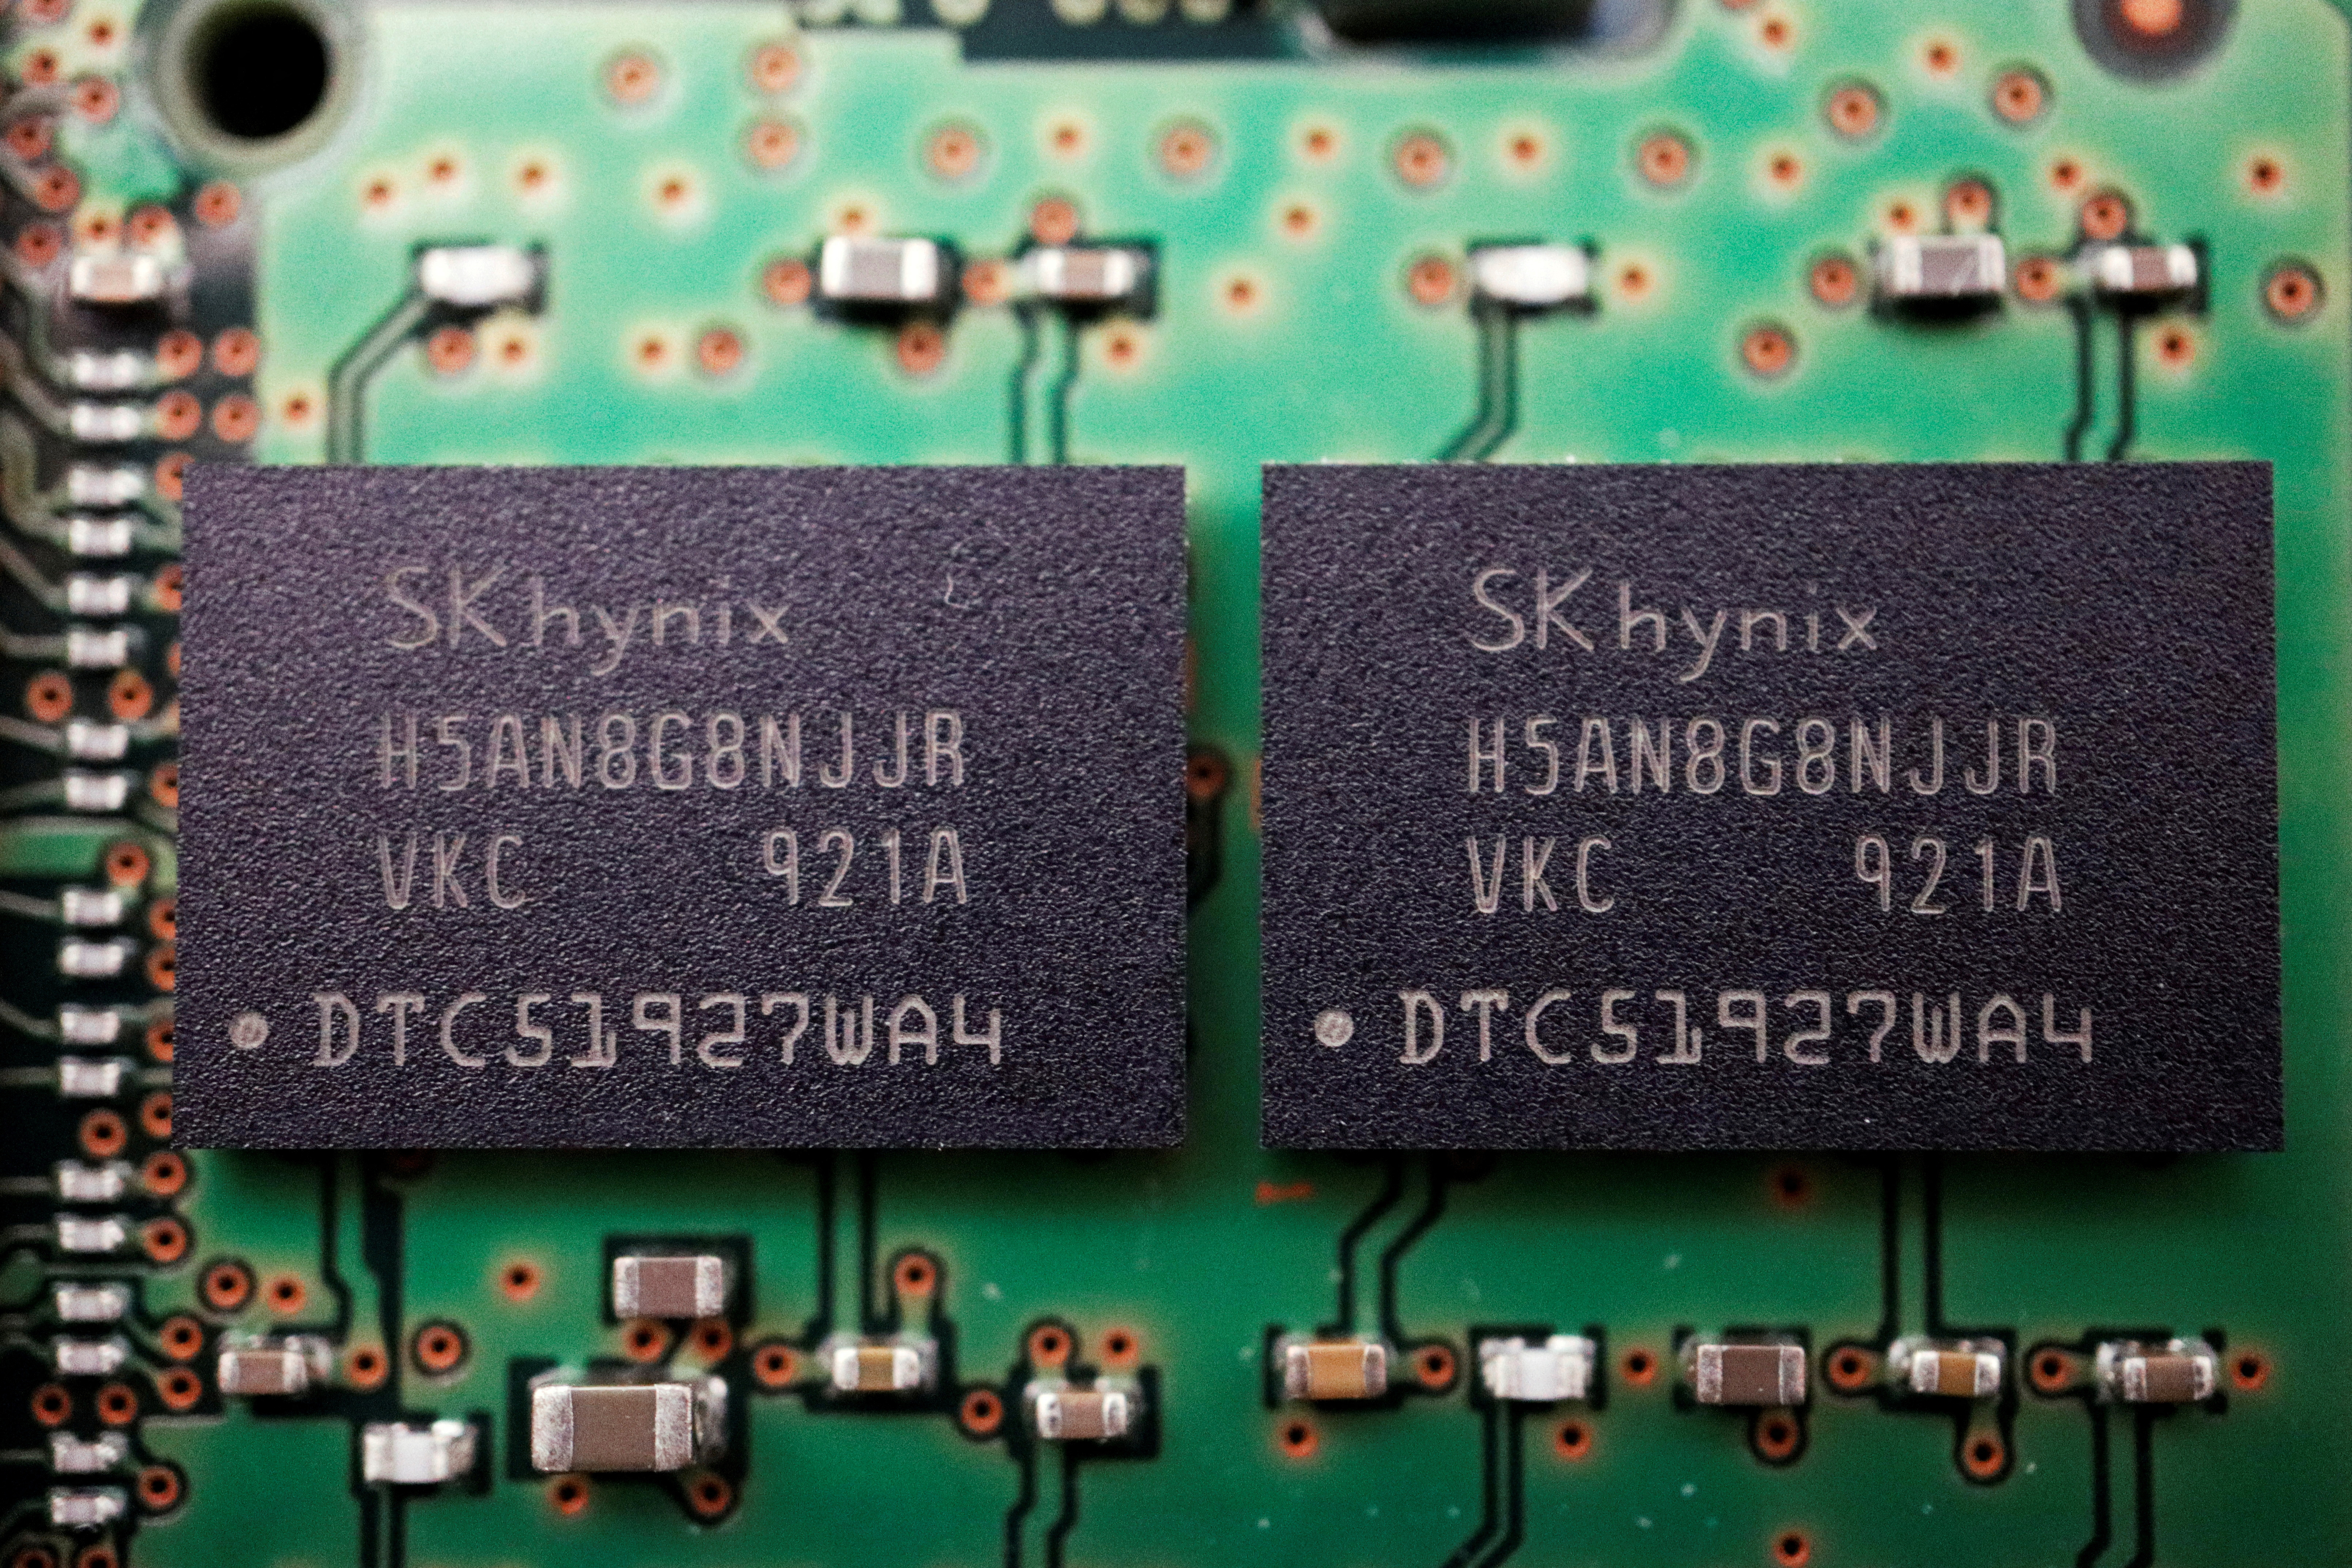 Illustrative image of SK Hynix memory chips